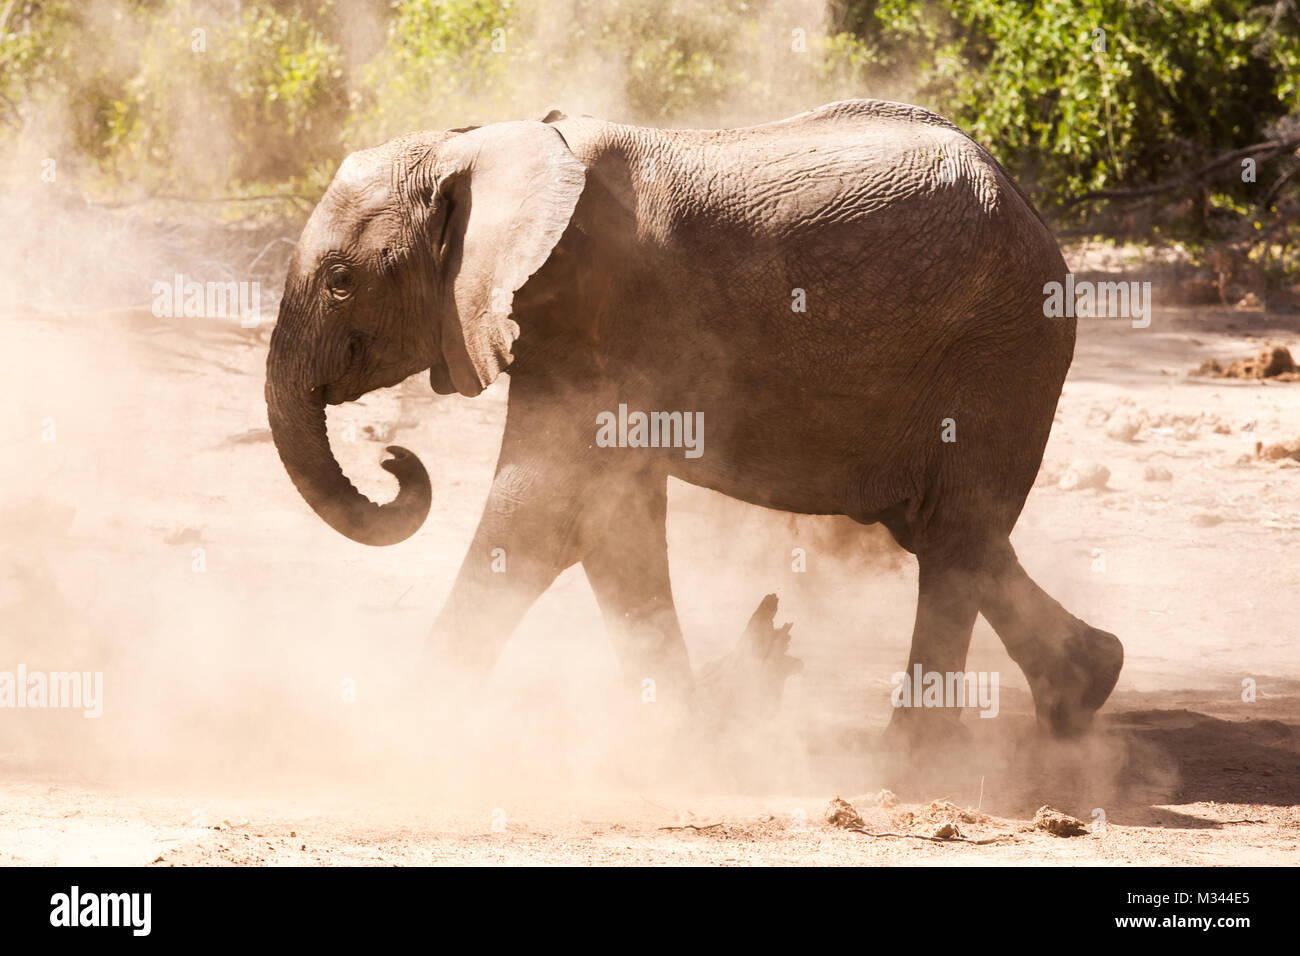 Elephant walking in desert, Namibie Banque D'Images